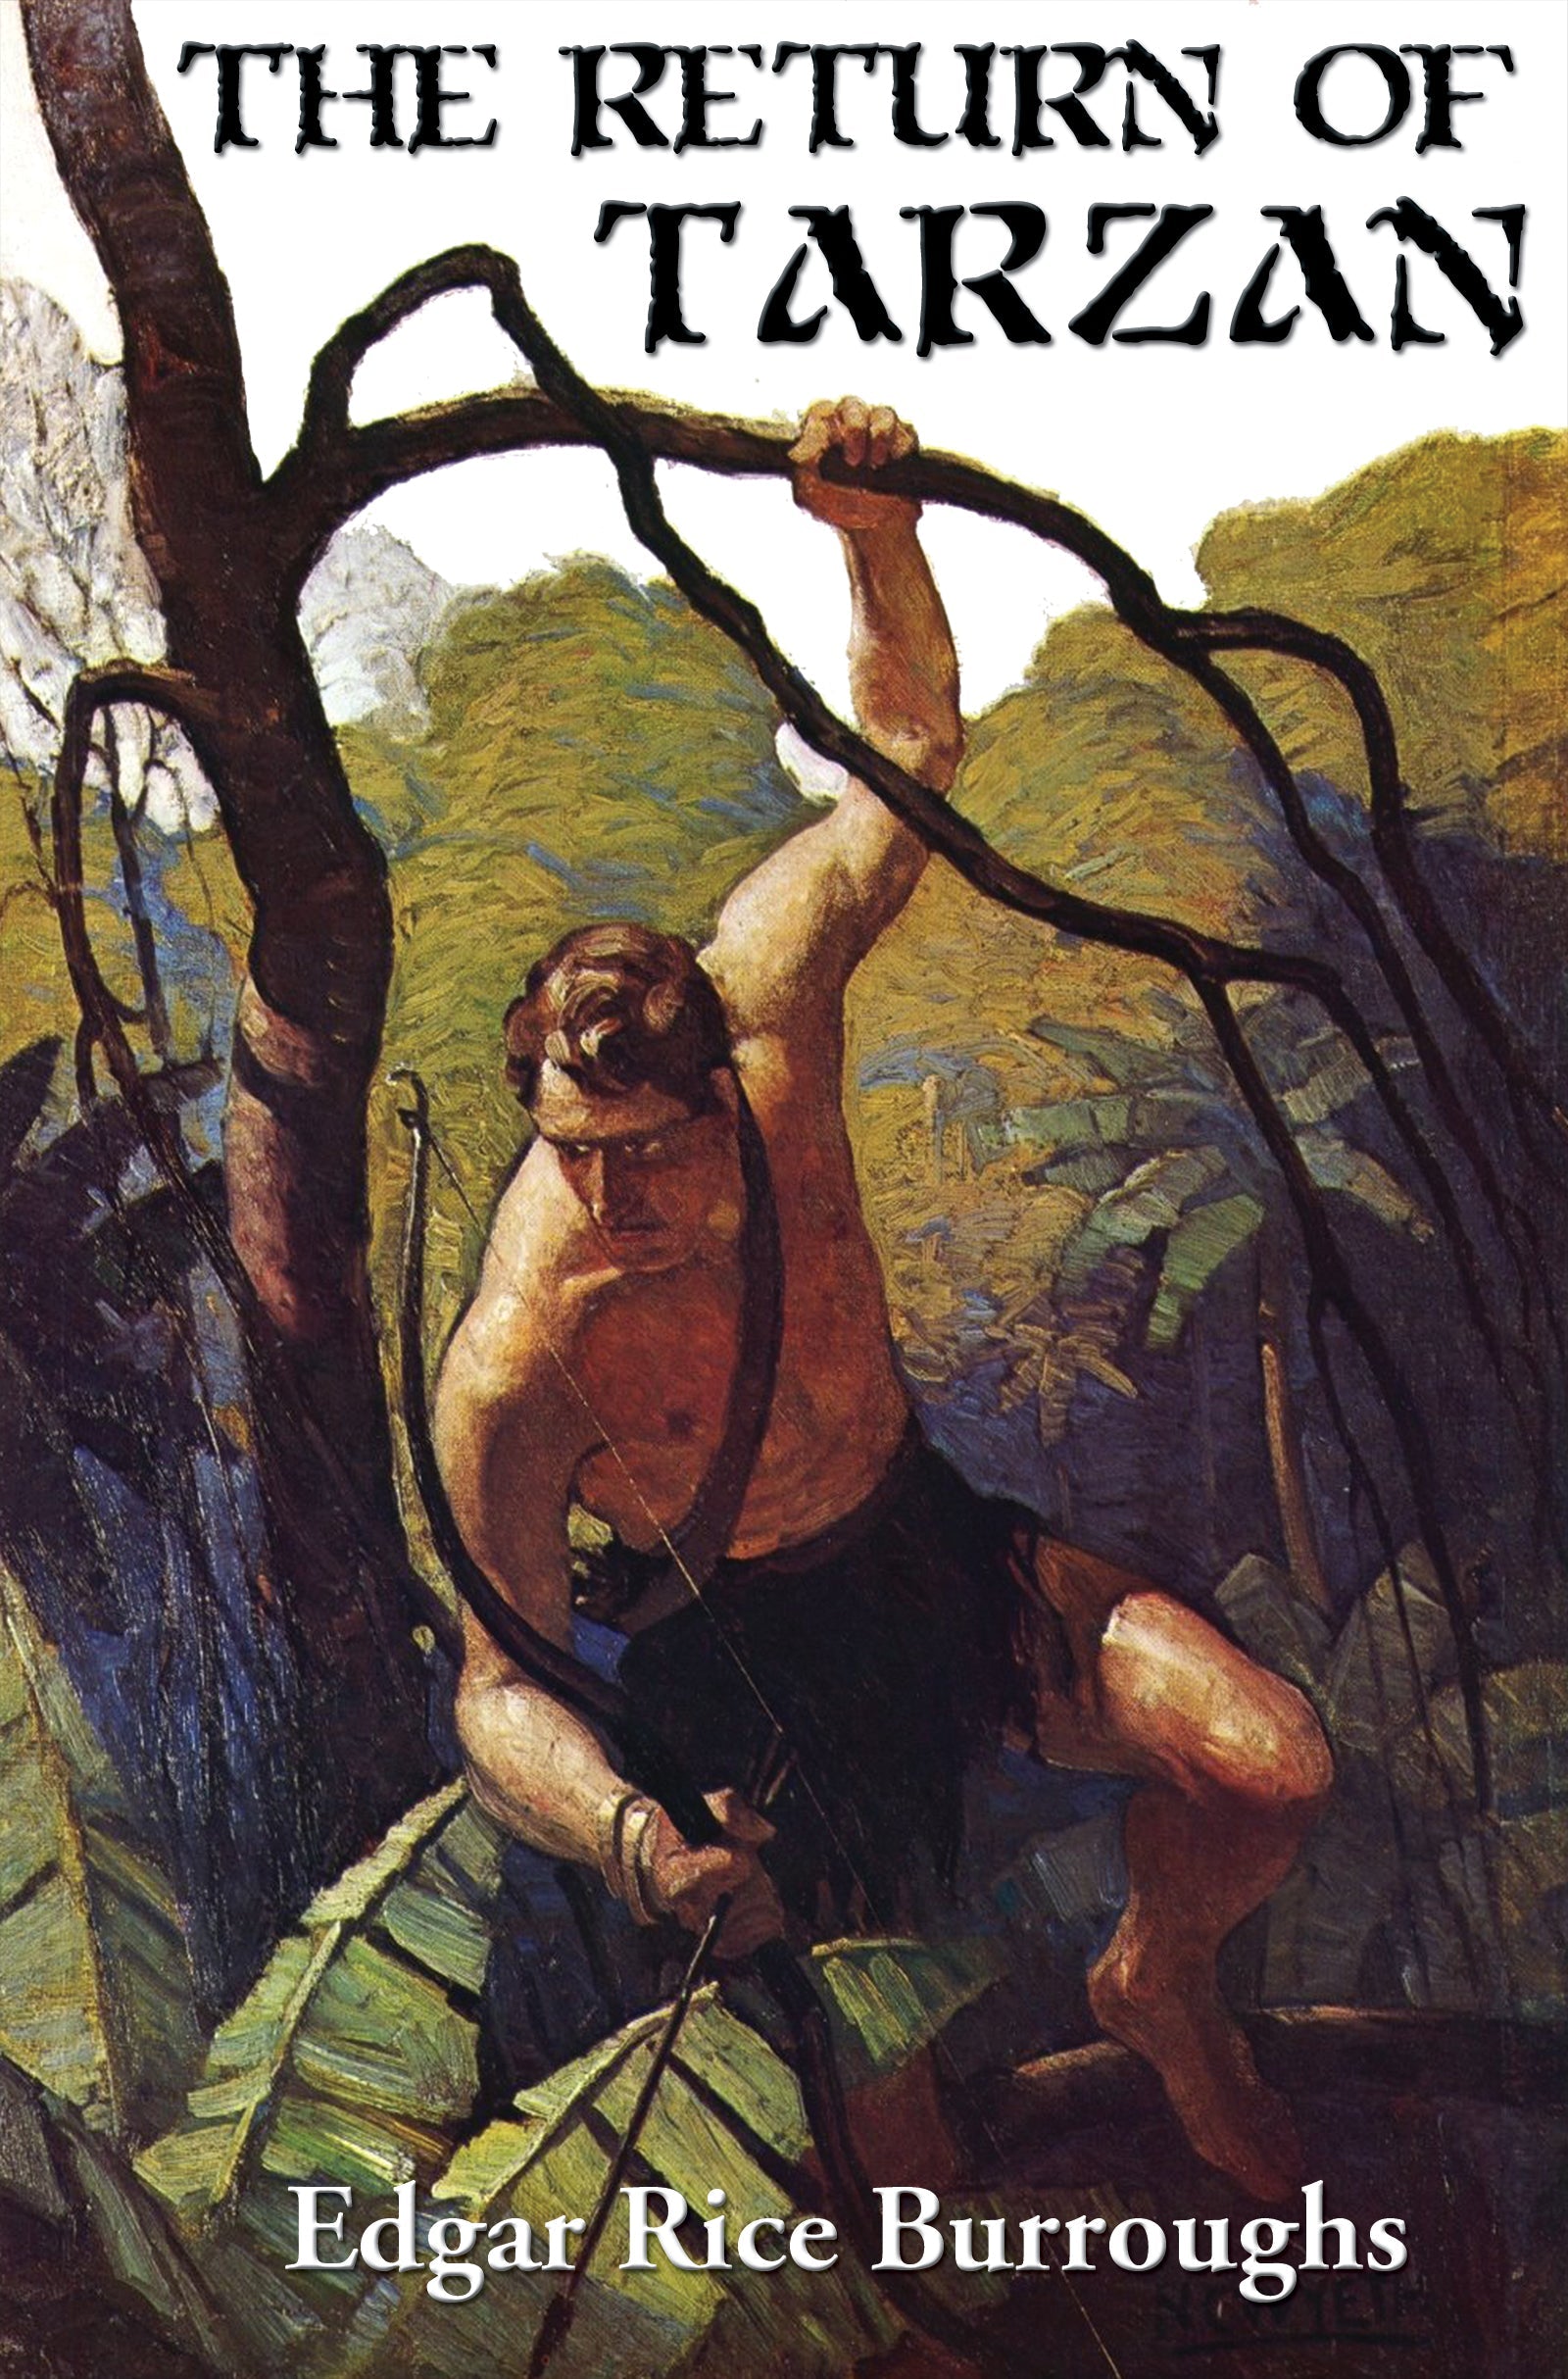 Cover art for The Return Of Tarzan.